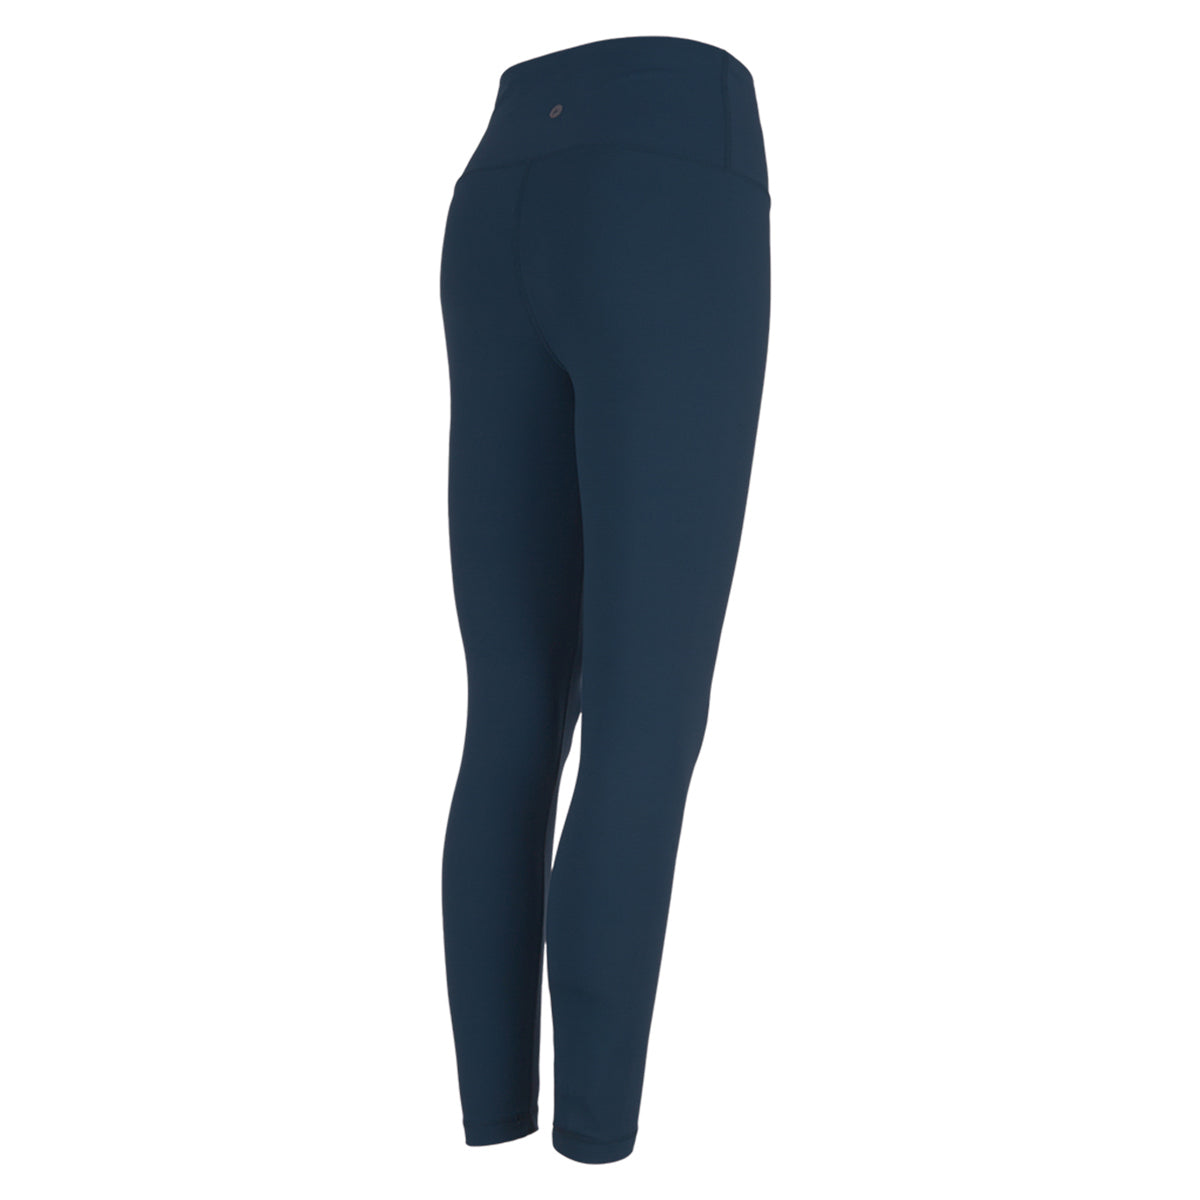 7/8 leggings pockets 90 degree by reflex light blu  90 degree by reflex,  Light blue color, Colorful leggings